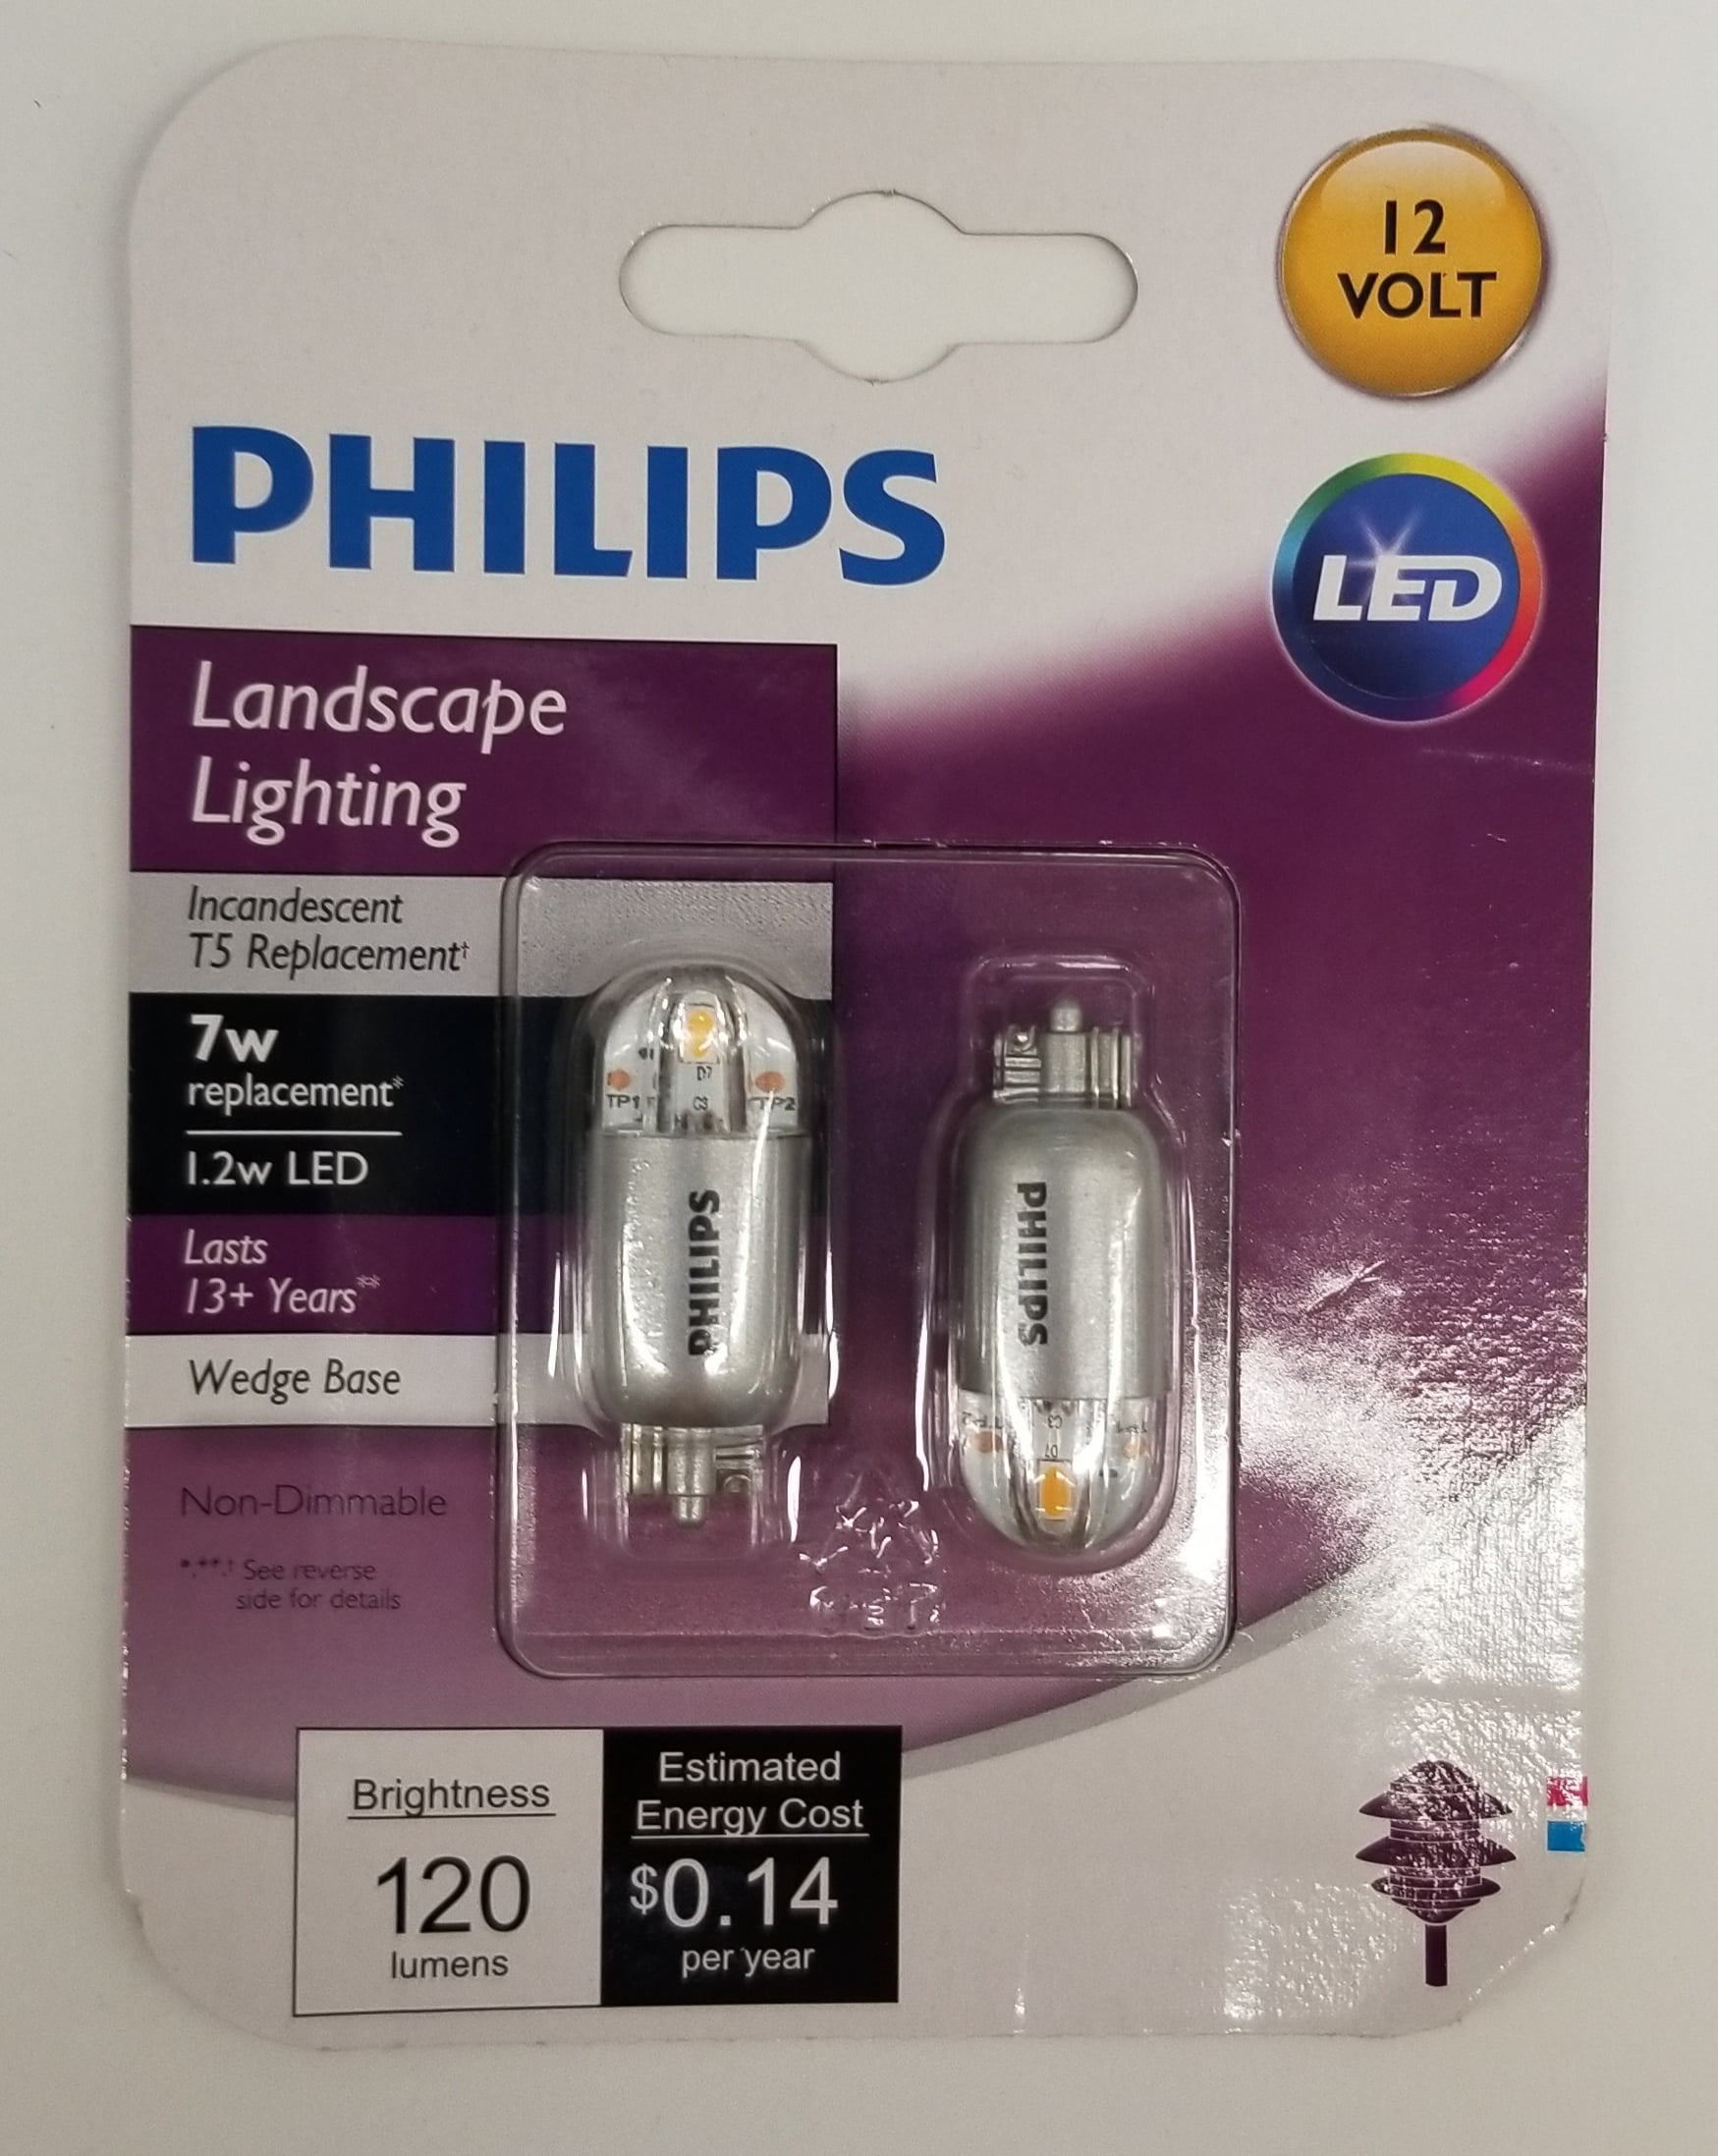 Phillips Led 7 Watt Light Bulb T5 Plc, T5 Wedge Led Landscape Bulb